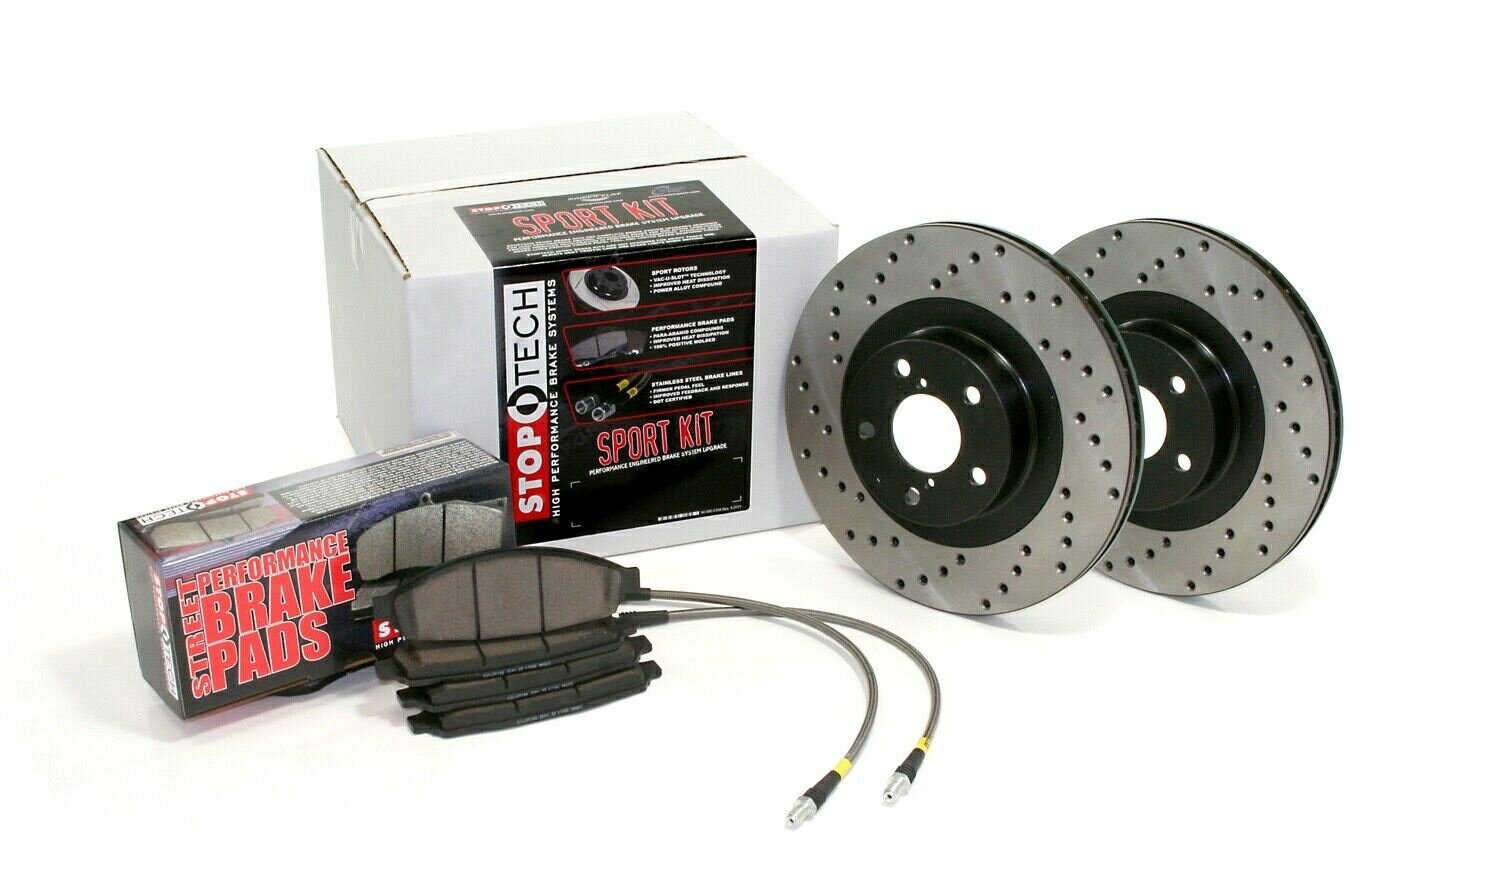 brake disc rotor STOPTECH 979.40016Fスポーツディスクブレーキキットw/クロスドリルローターはプレリュードに適合します StopTech 979.40016F Sport Disc Brake Kit w/Cross-Drilled Rotors Fits Prelude